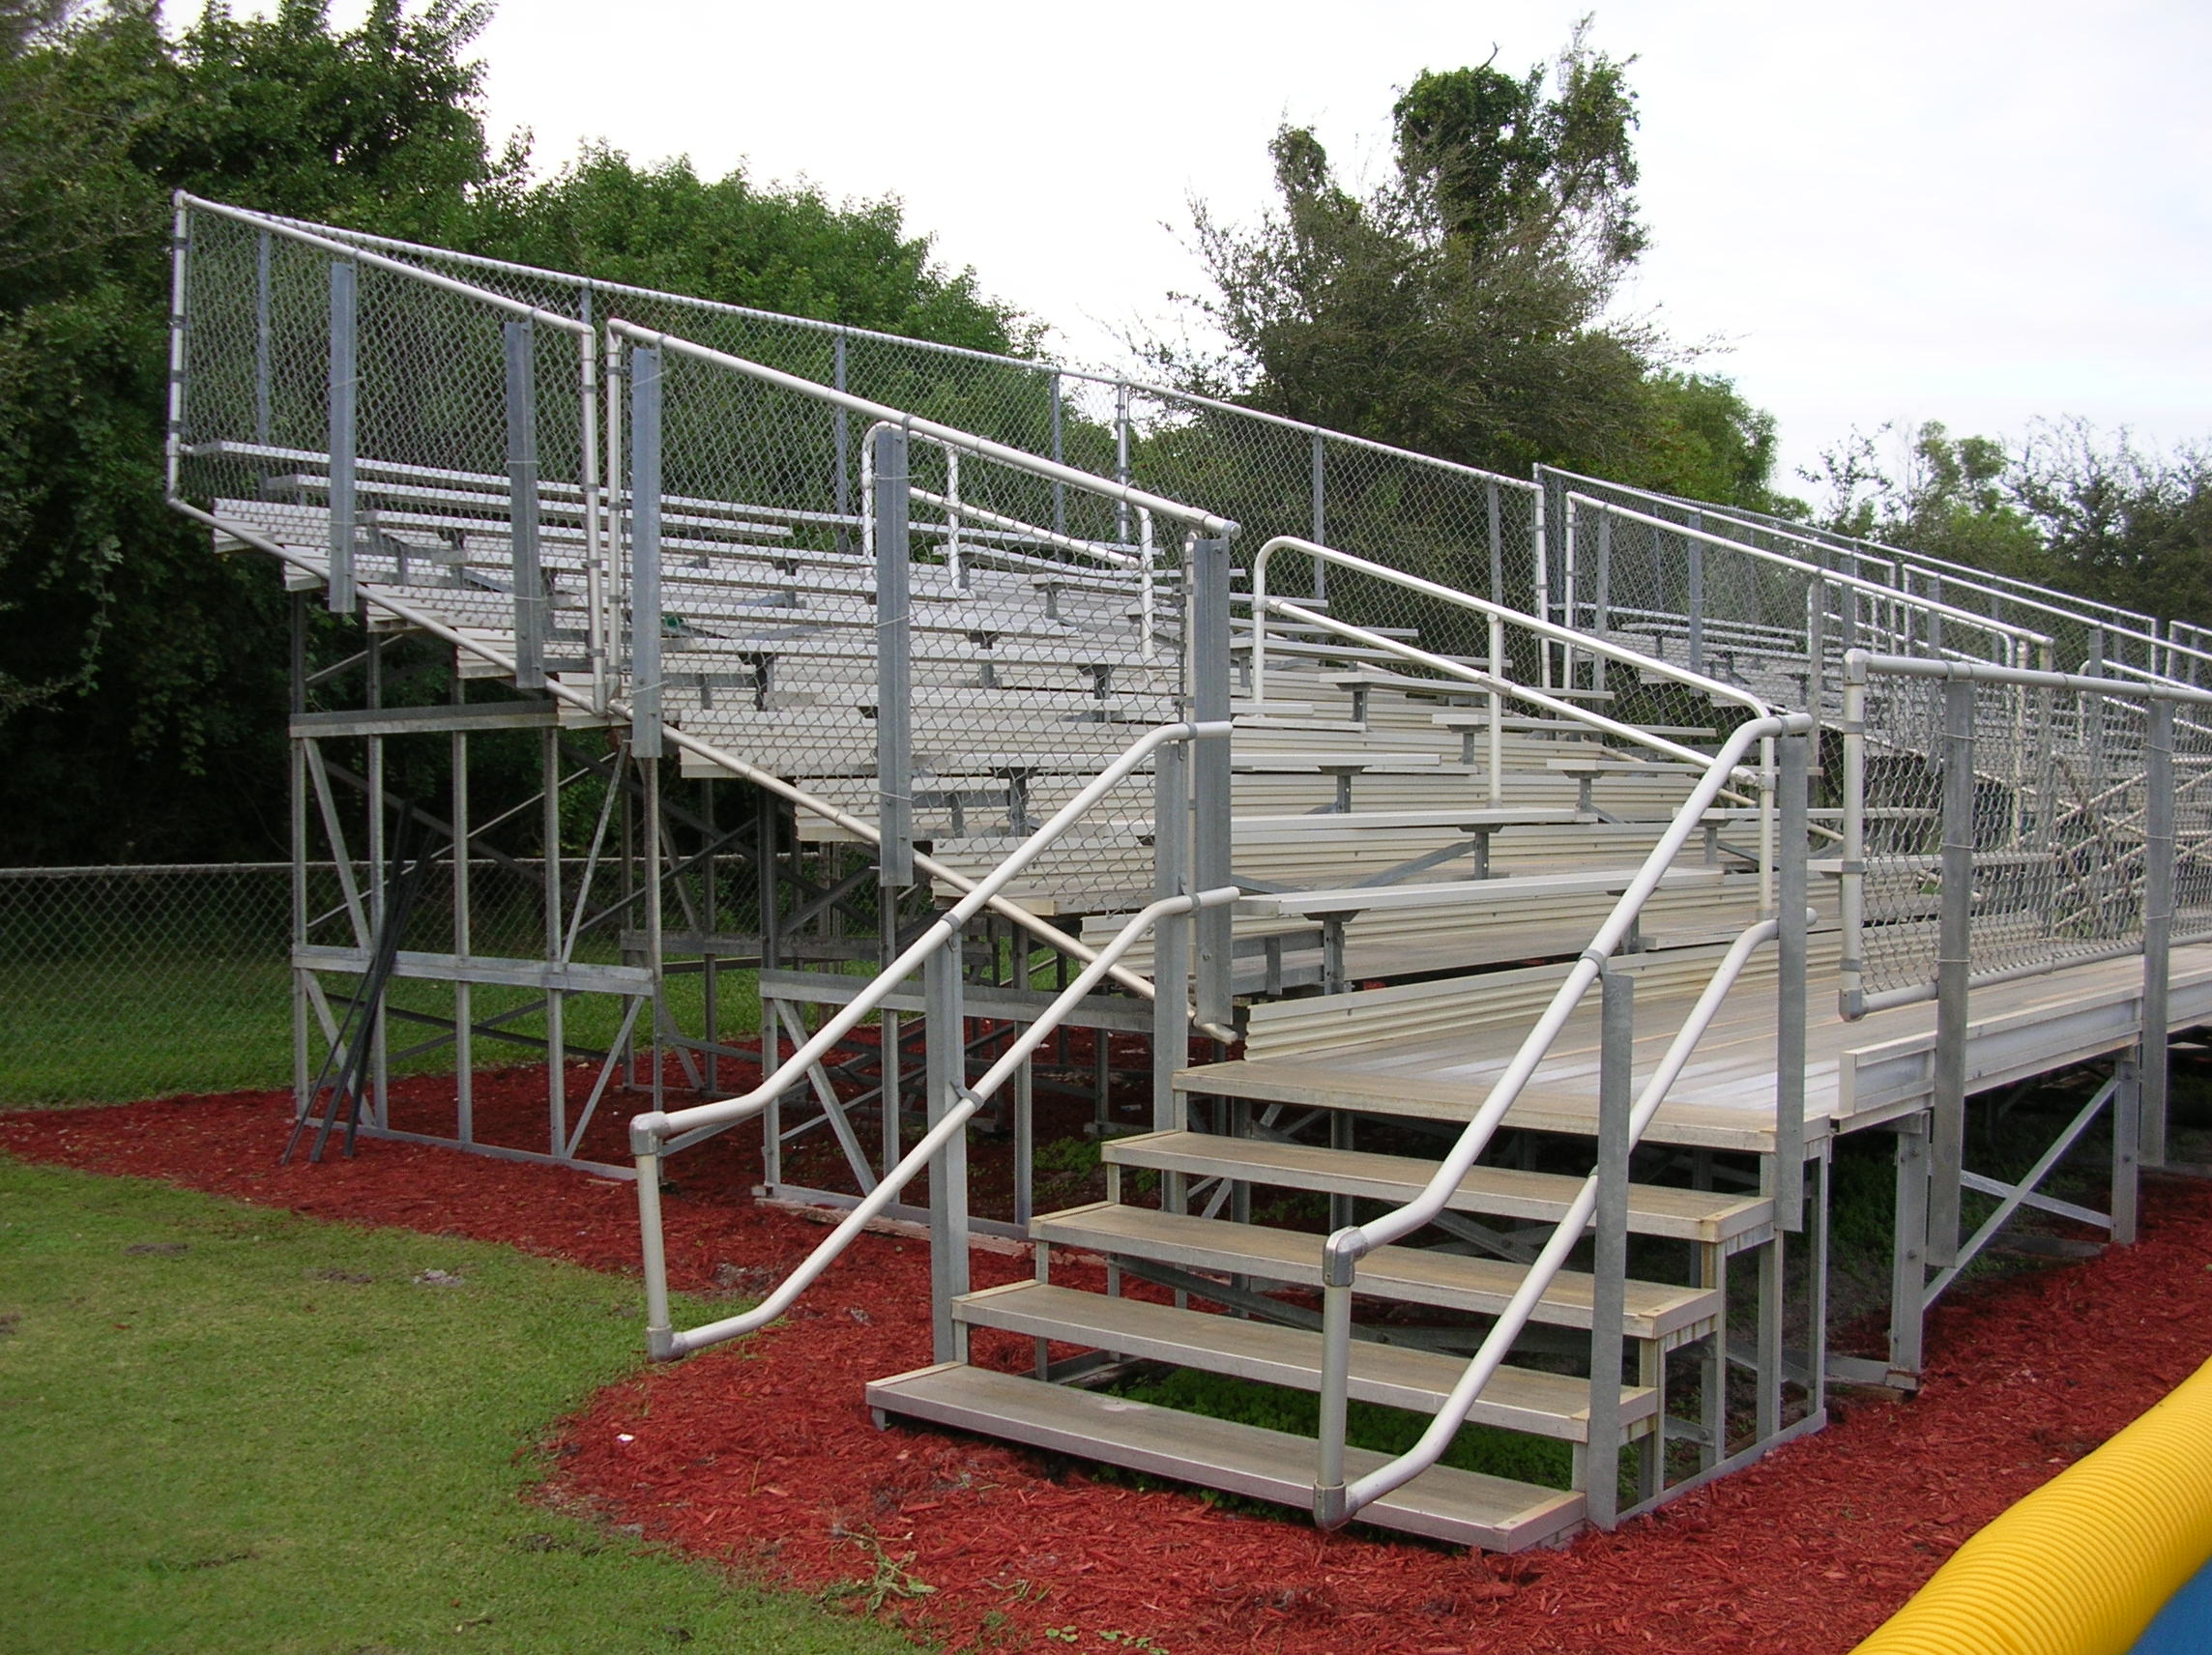 Elevated aluminum bleachers for a baseball field